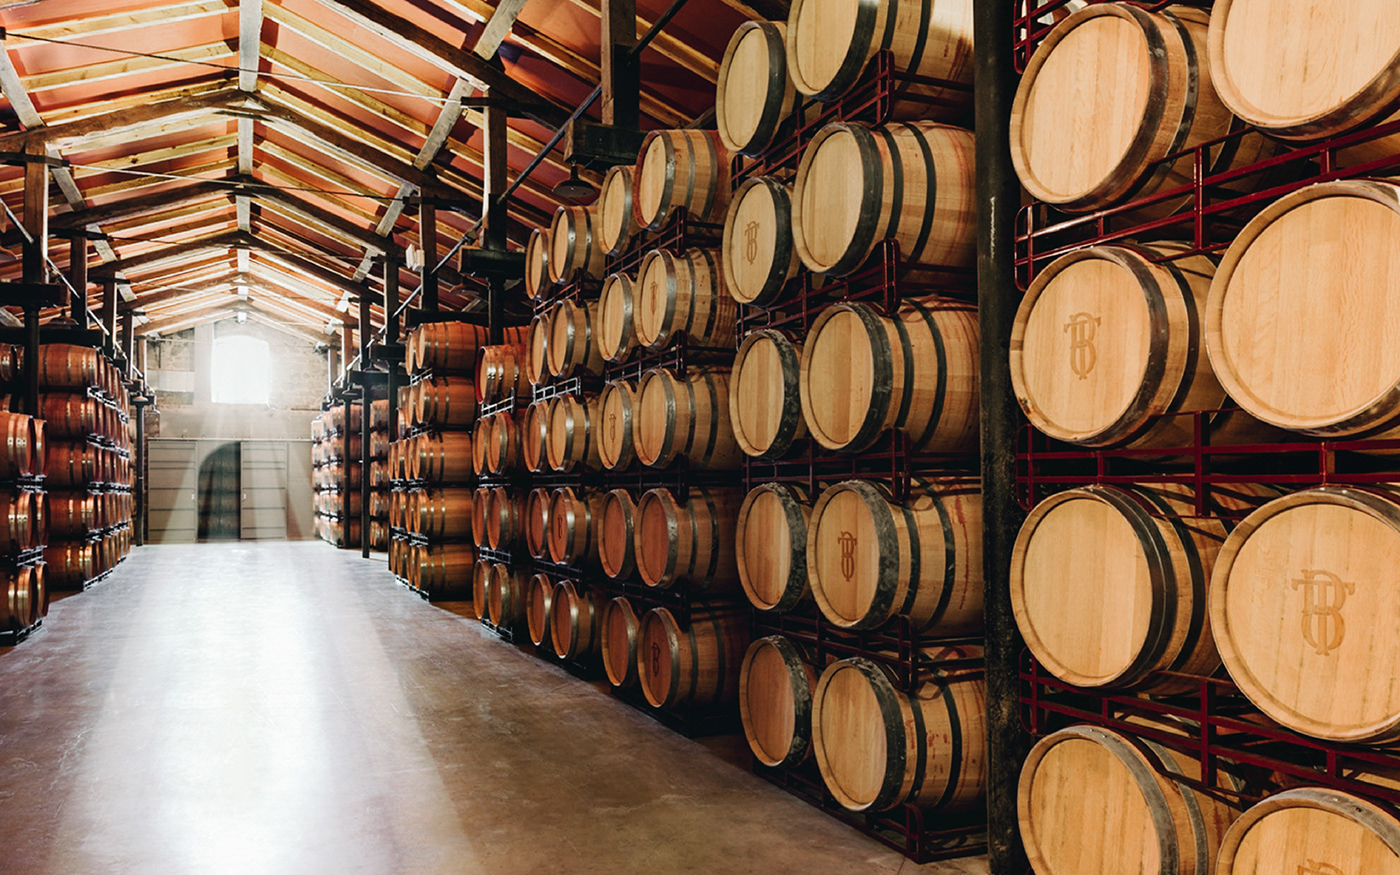 Terra d'Oro wine barrels